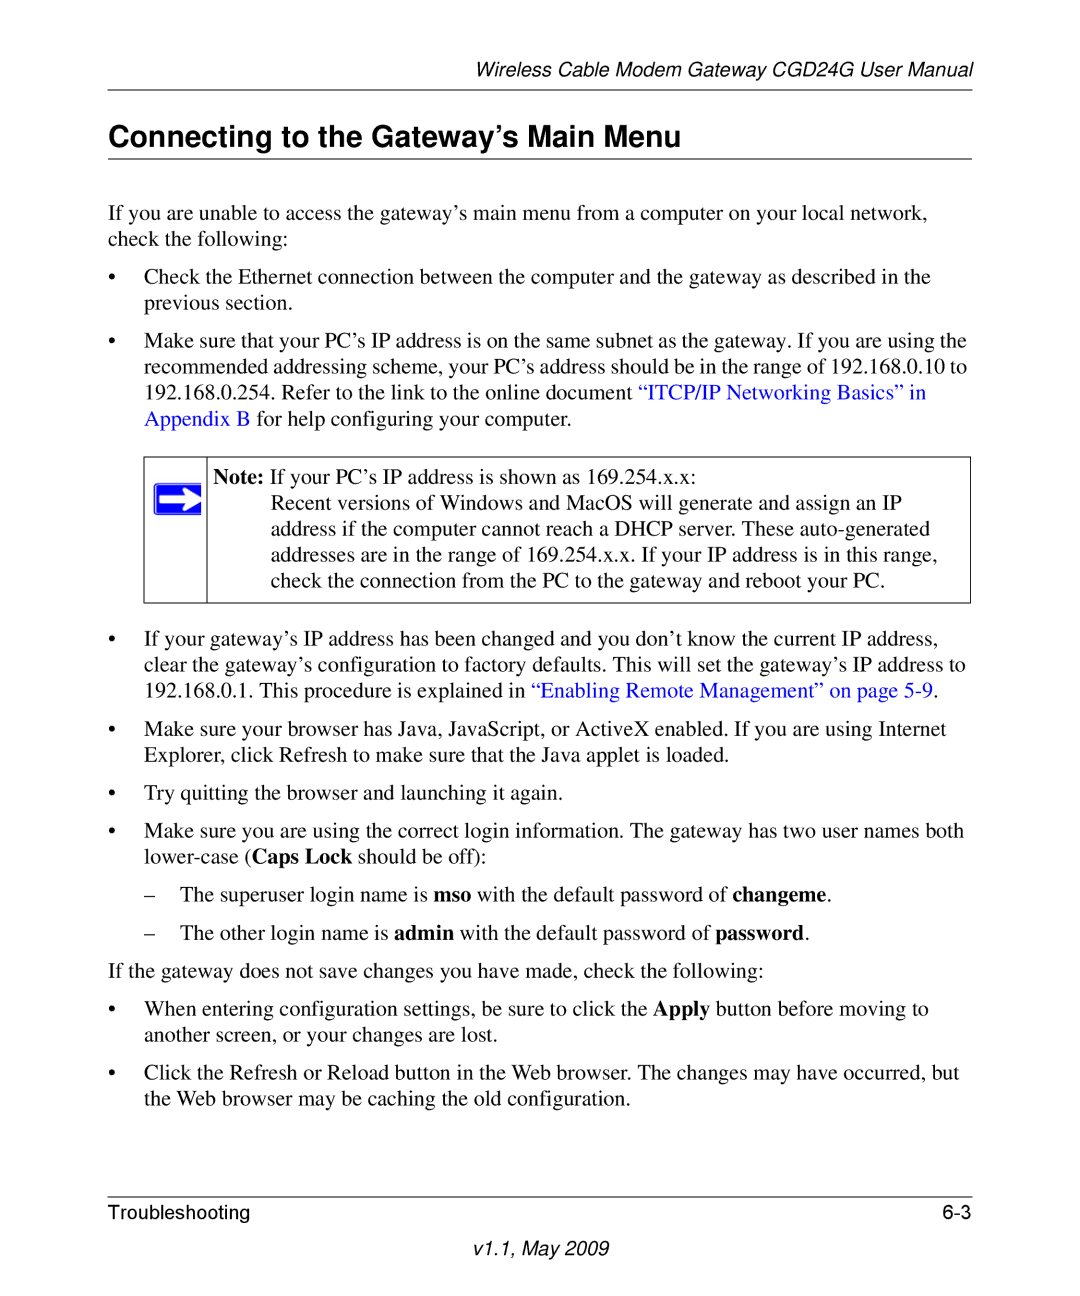 Gateway CGD24G user manual Connecting to the Gateway’s Main Menu 